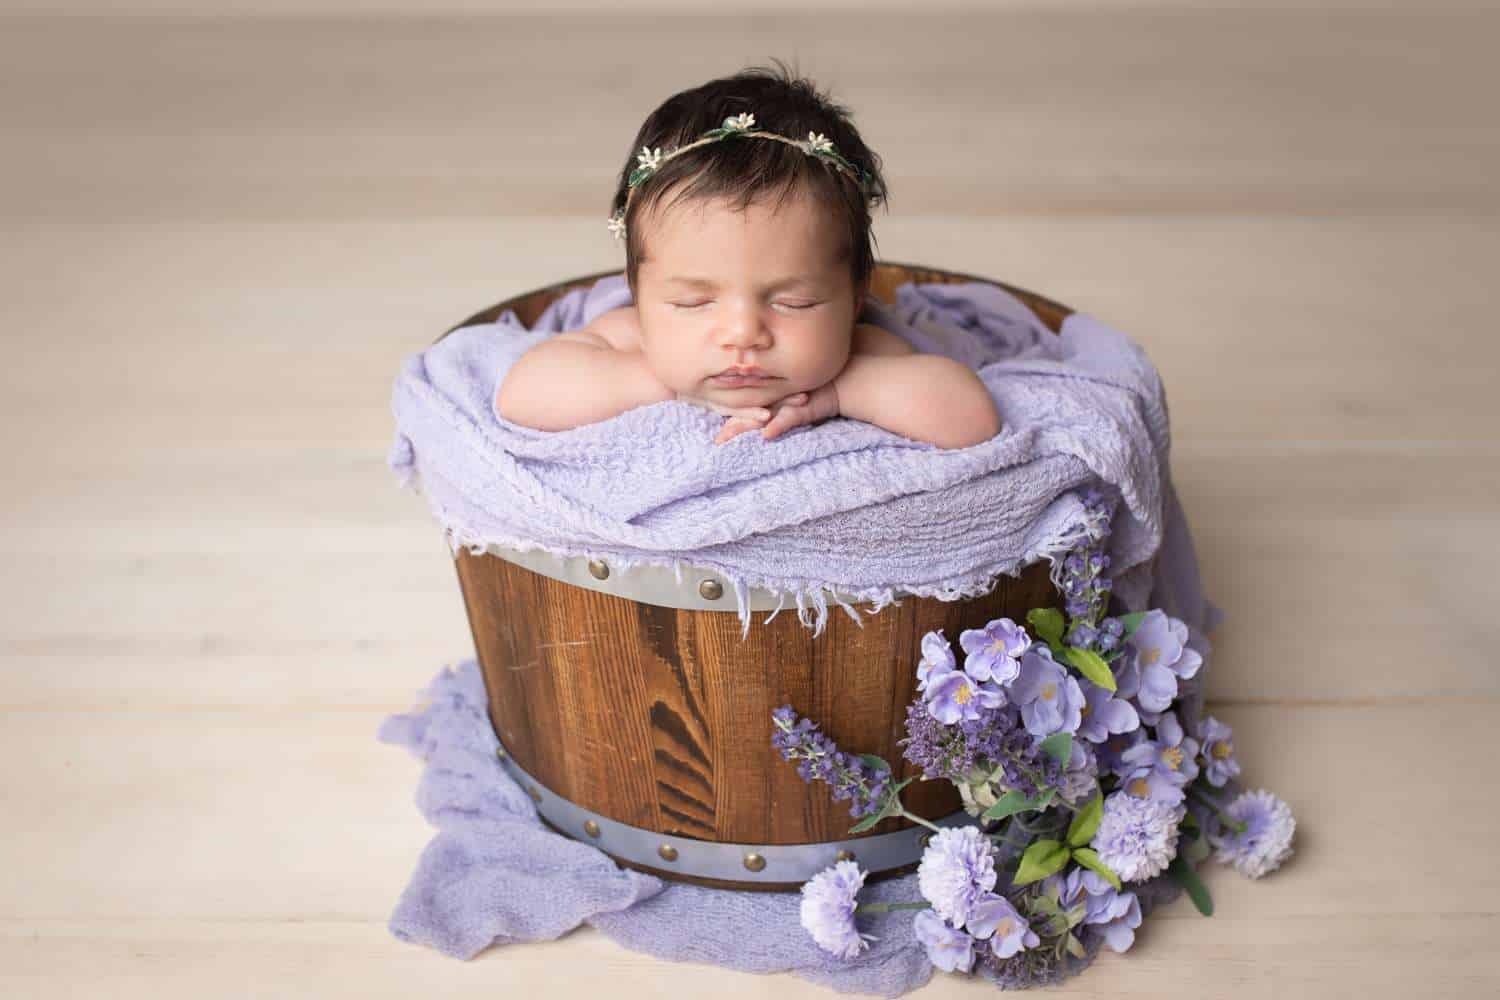 newborn photographer in rochester ny captures newborn baby girl in a bucket